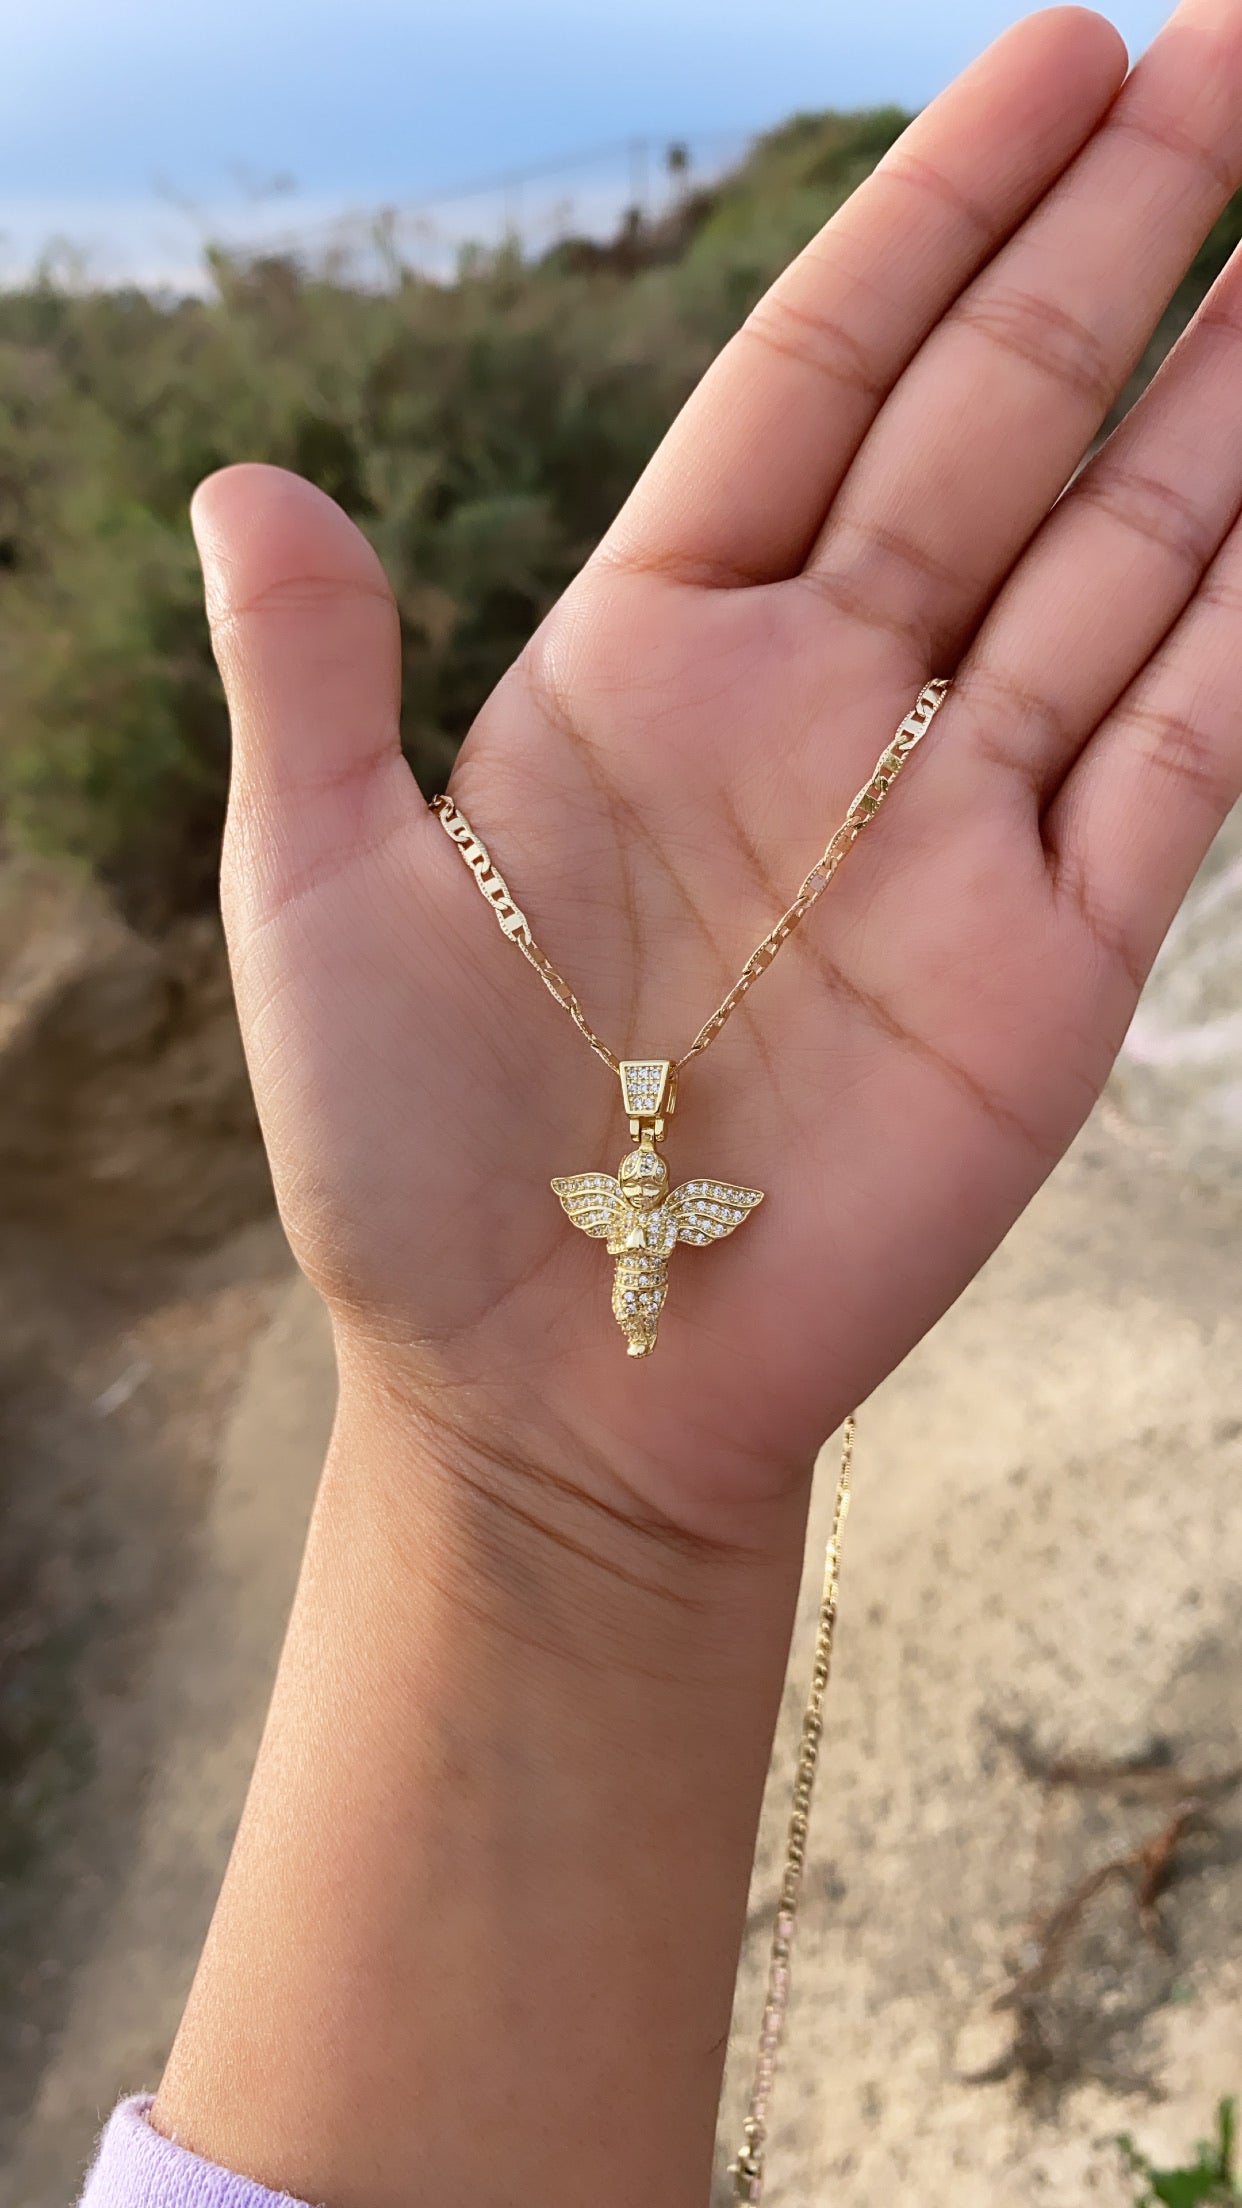 Angelito necklace